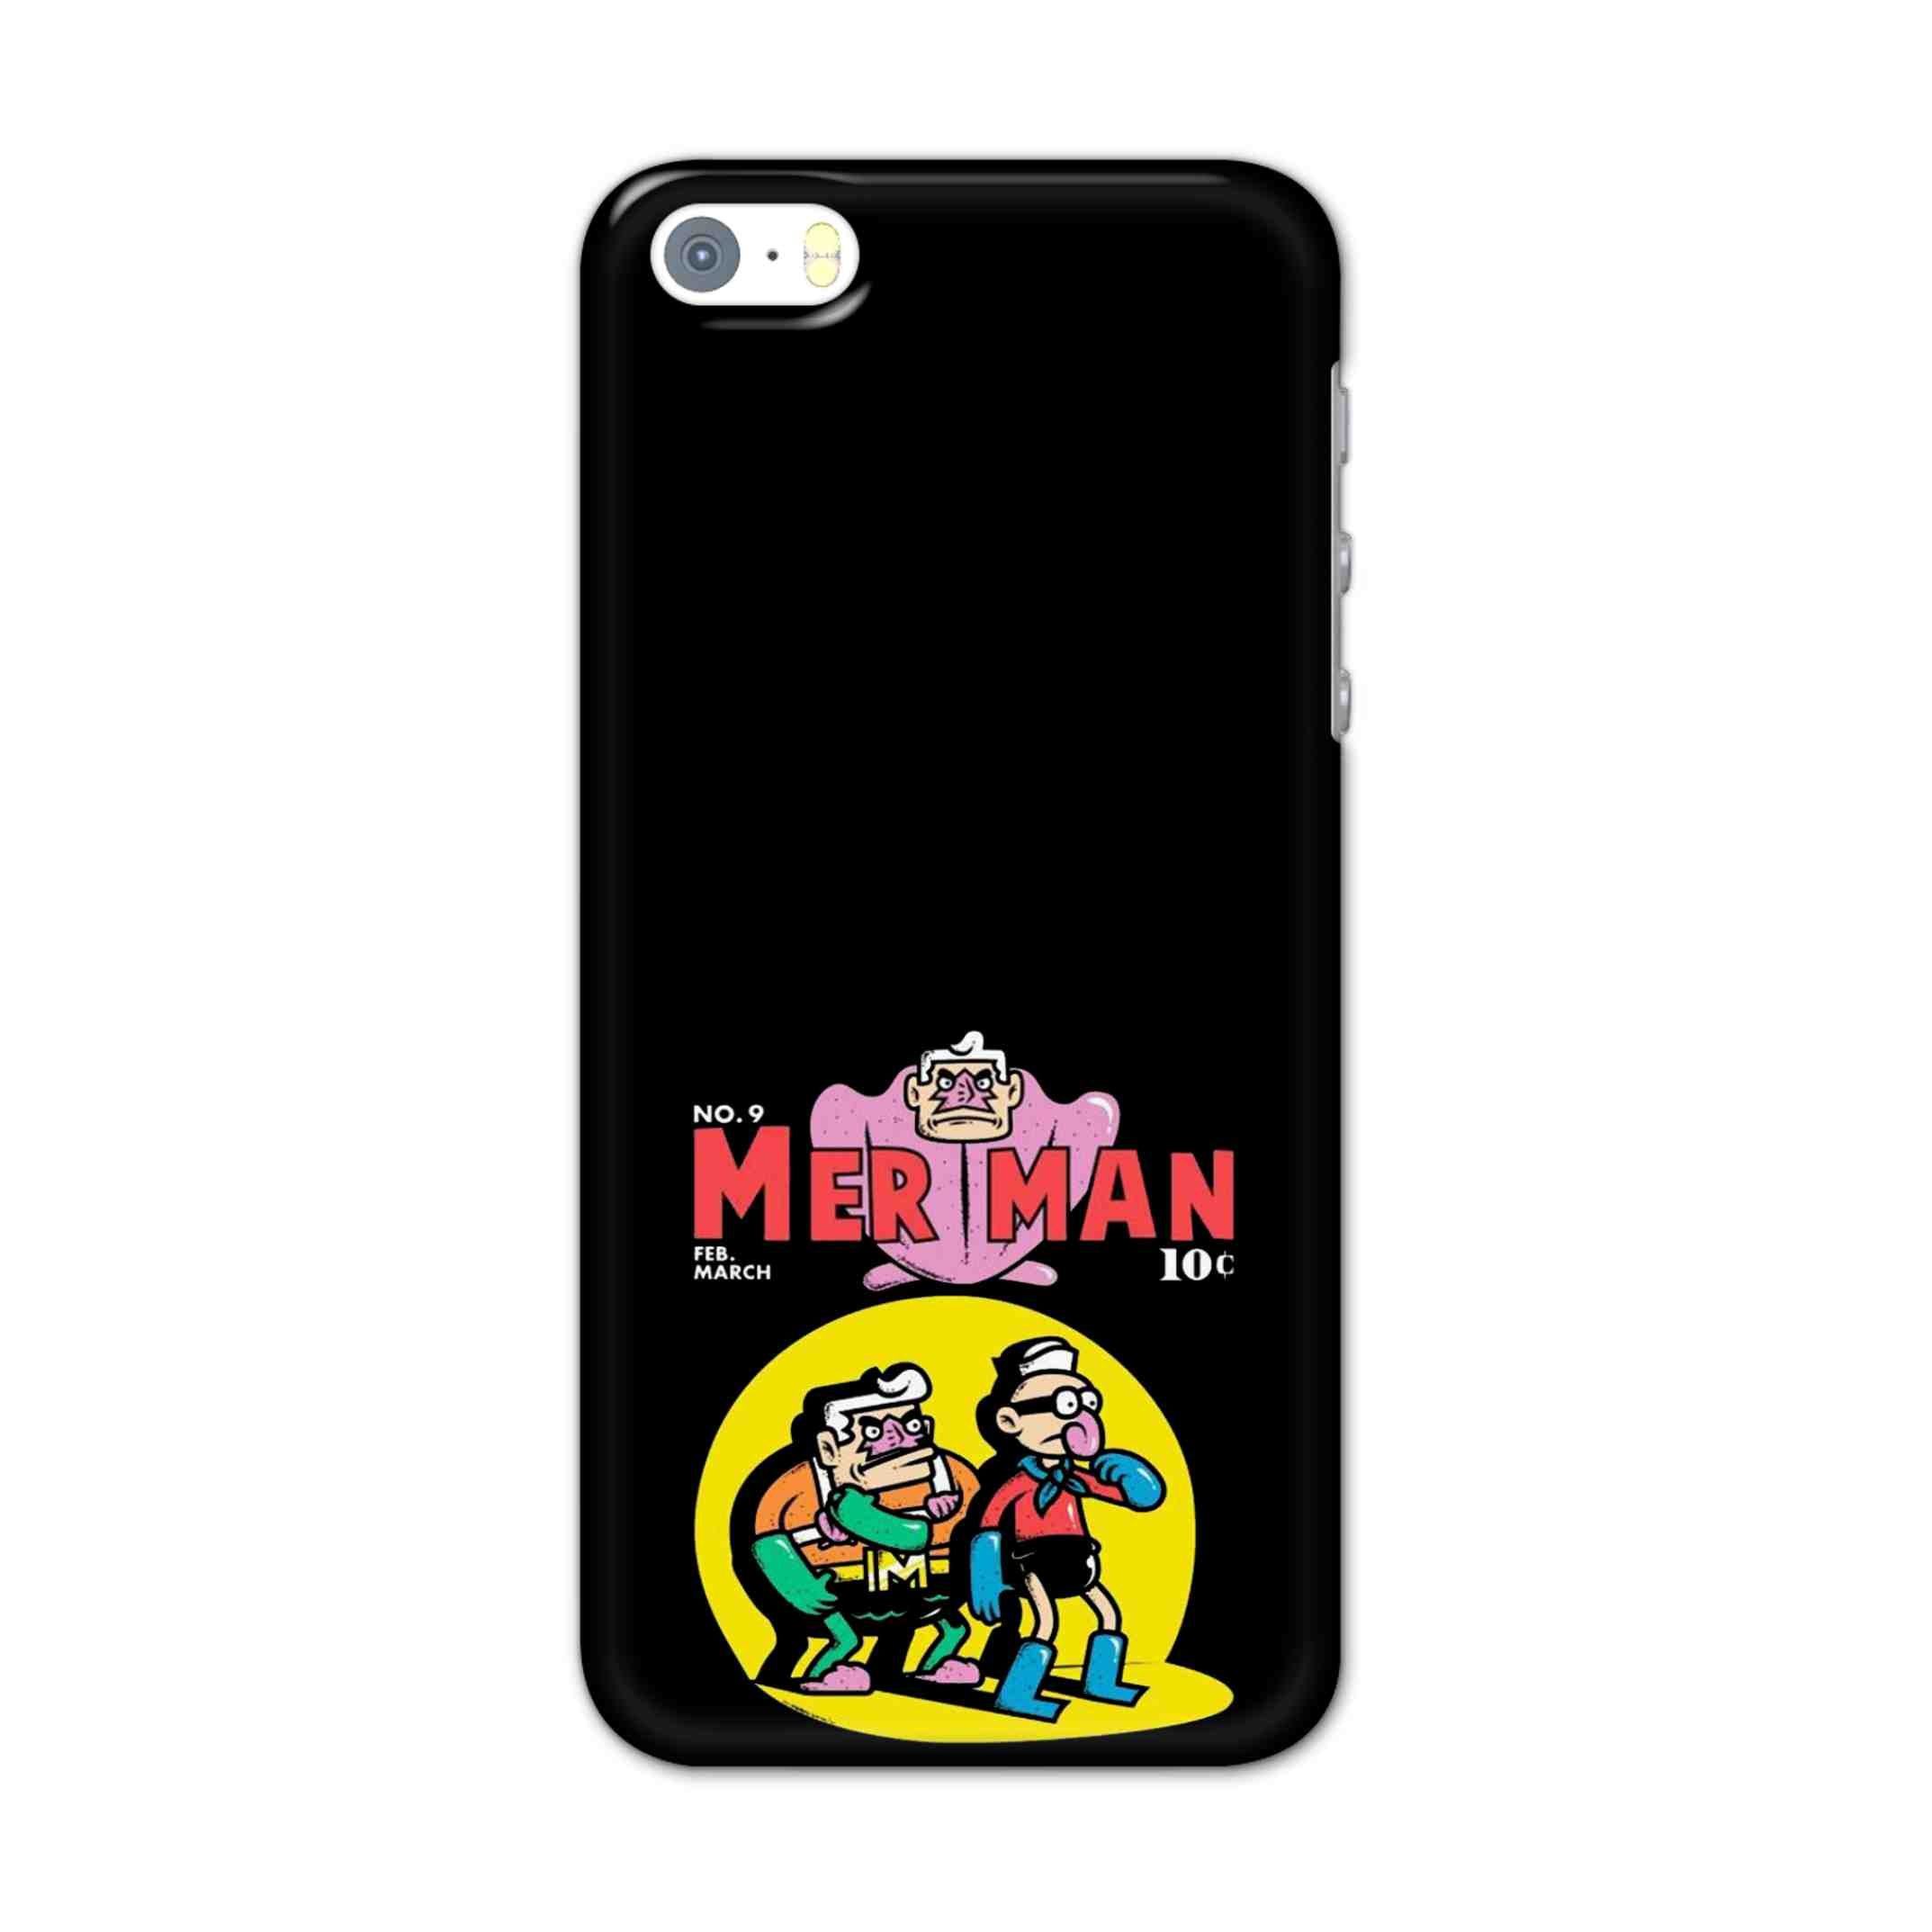 Buy Merman Hard Back Mobile Phone Case/Cover For Apple Iphone SE Online